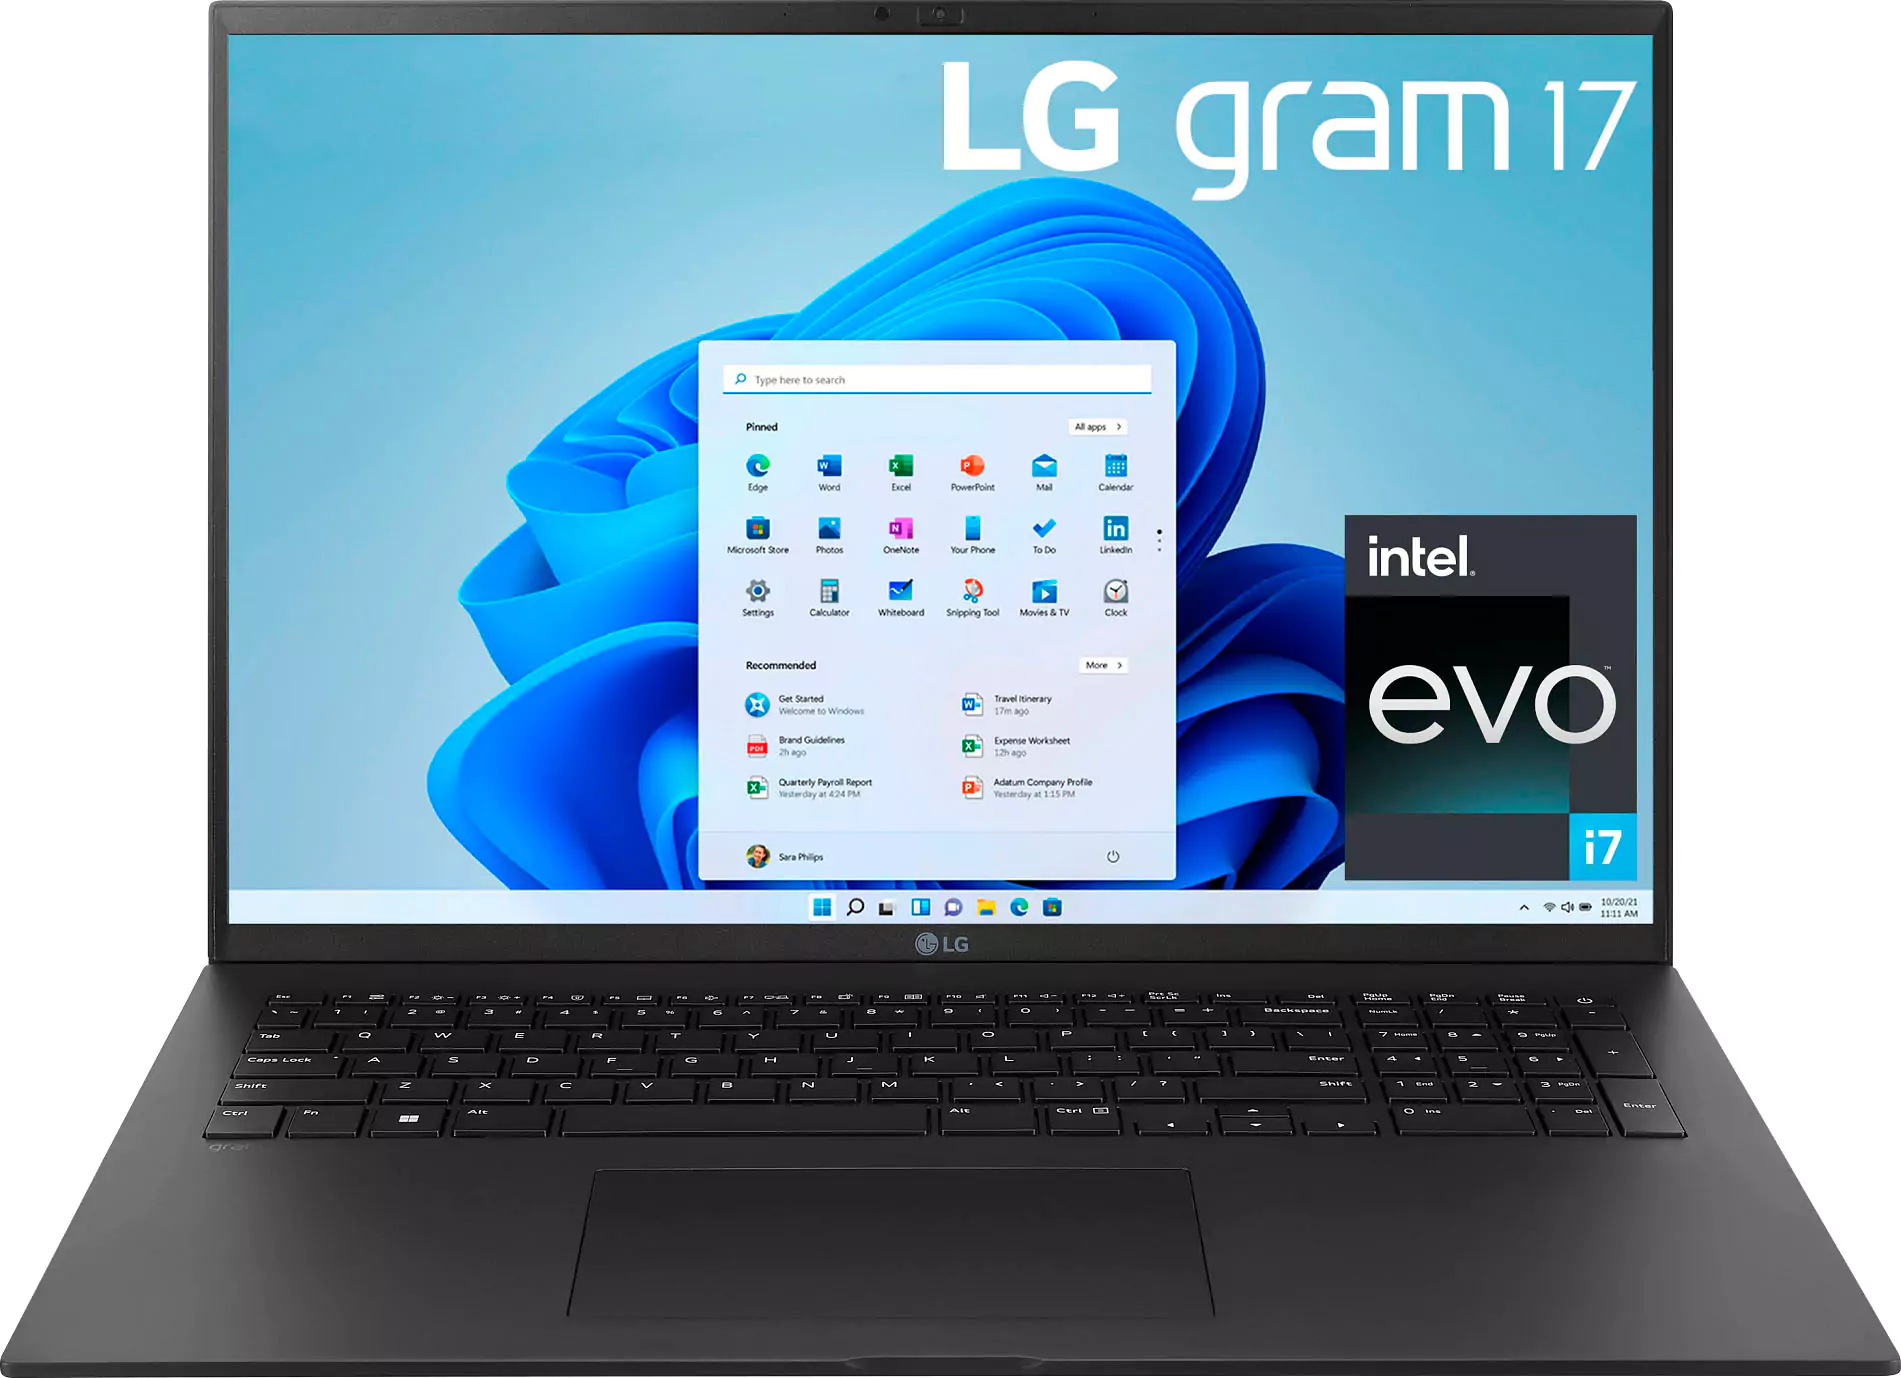 LG Gram 17 digital nomad laptop for travel